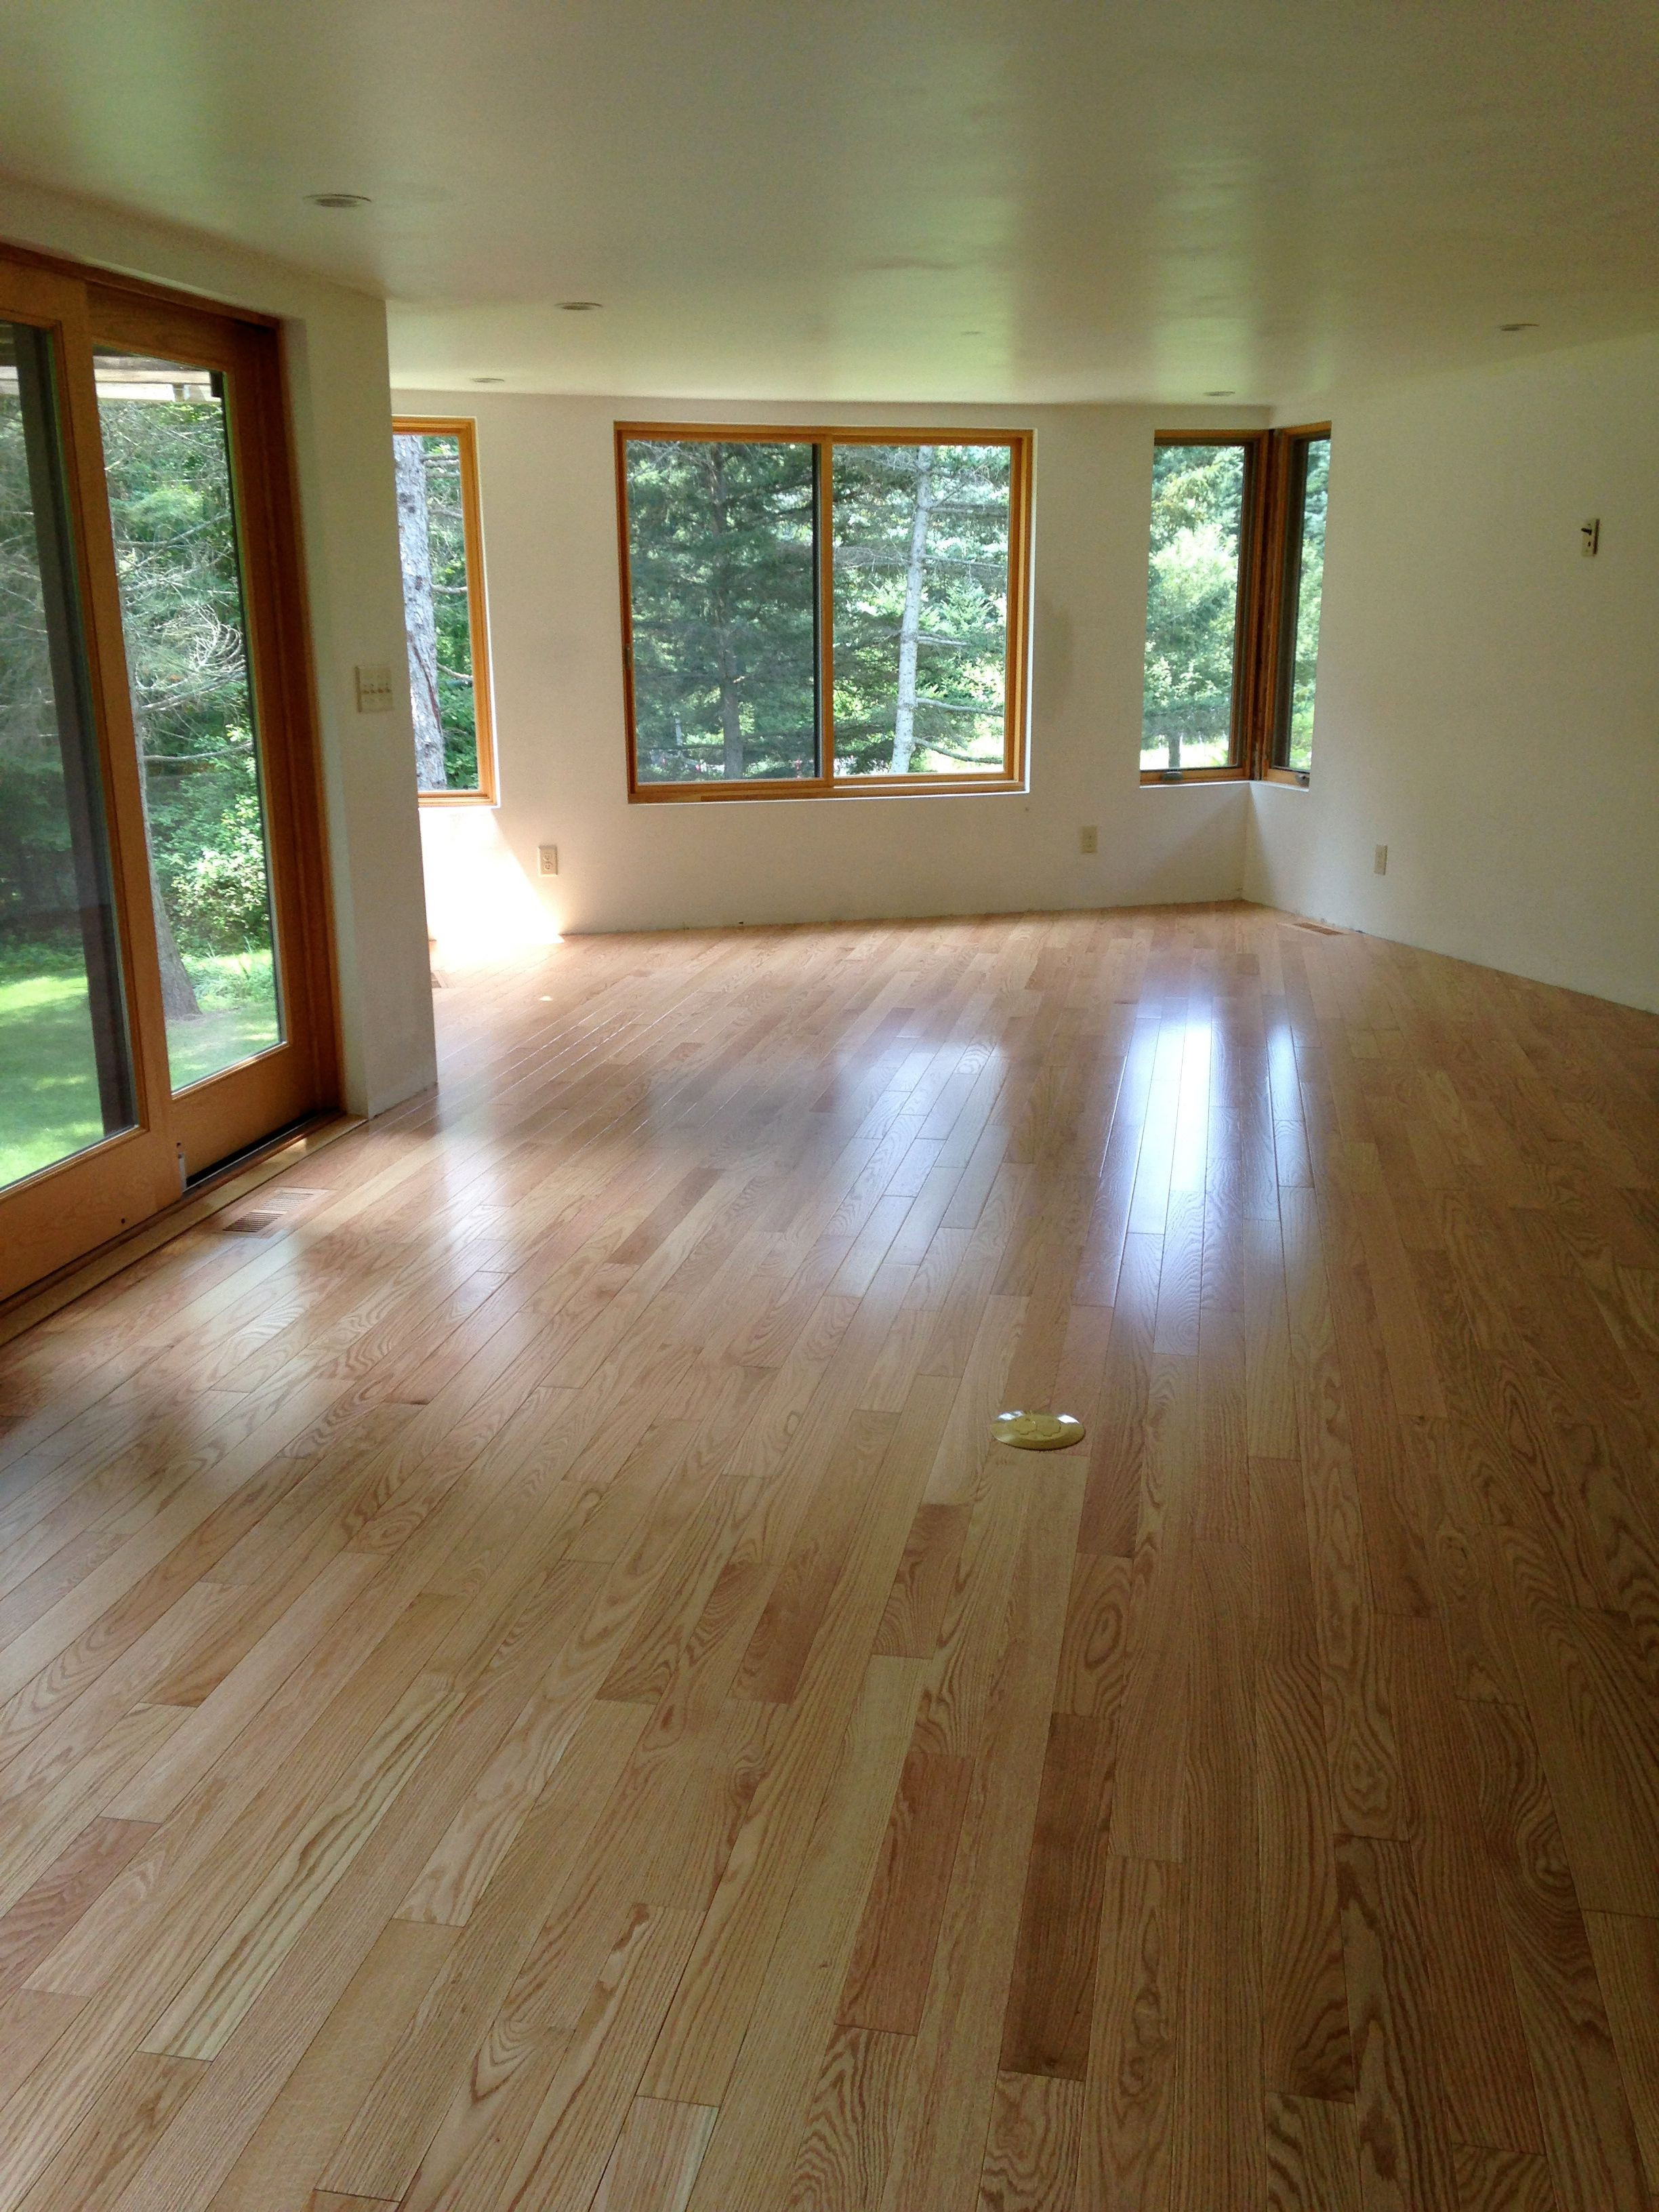 24 Fantastic Hardwood Floor Renovation 2024 free download hardwood floor renovation of wood floor refinishing floor plan ideas with 21 photos of the wood floor refinishing